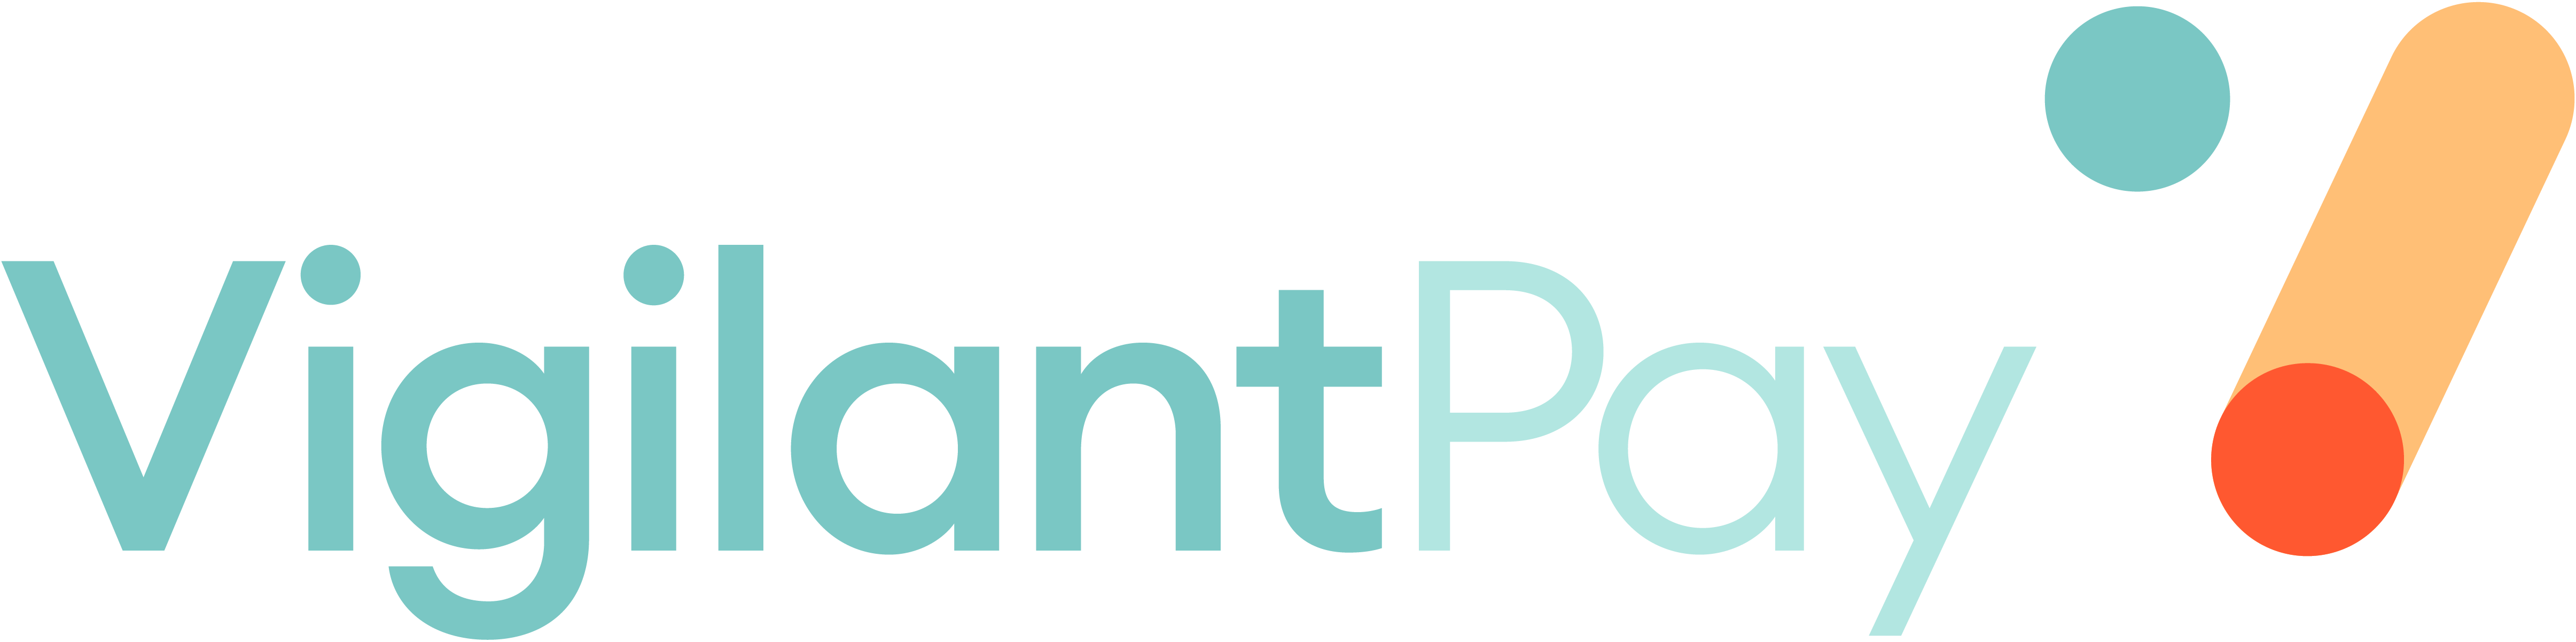 VigilantPay-logo-Colour-no tagline